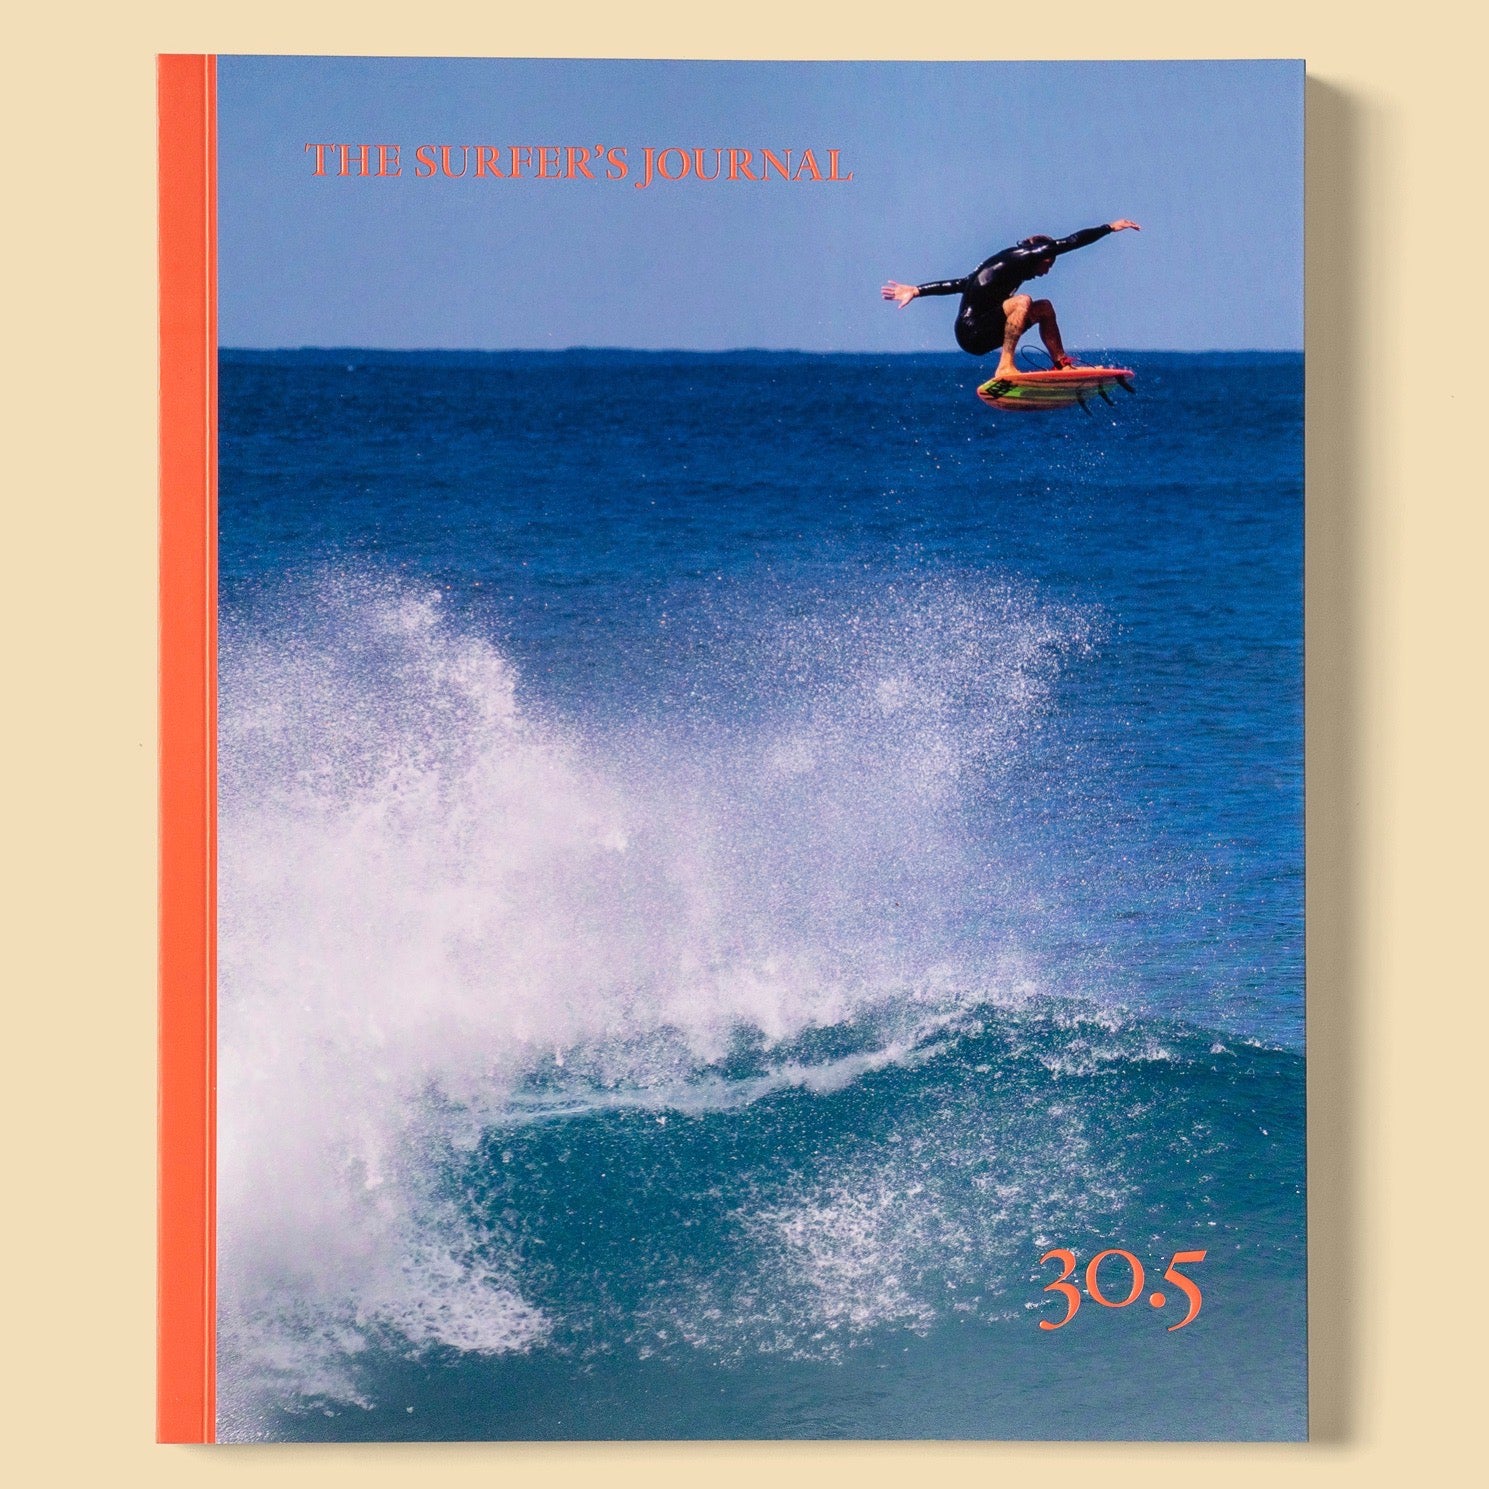 THE SURFER'S JOURNAL 30.5 - REBEL FIN CO.